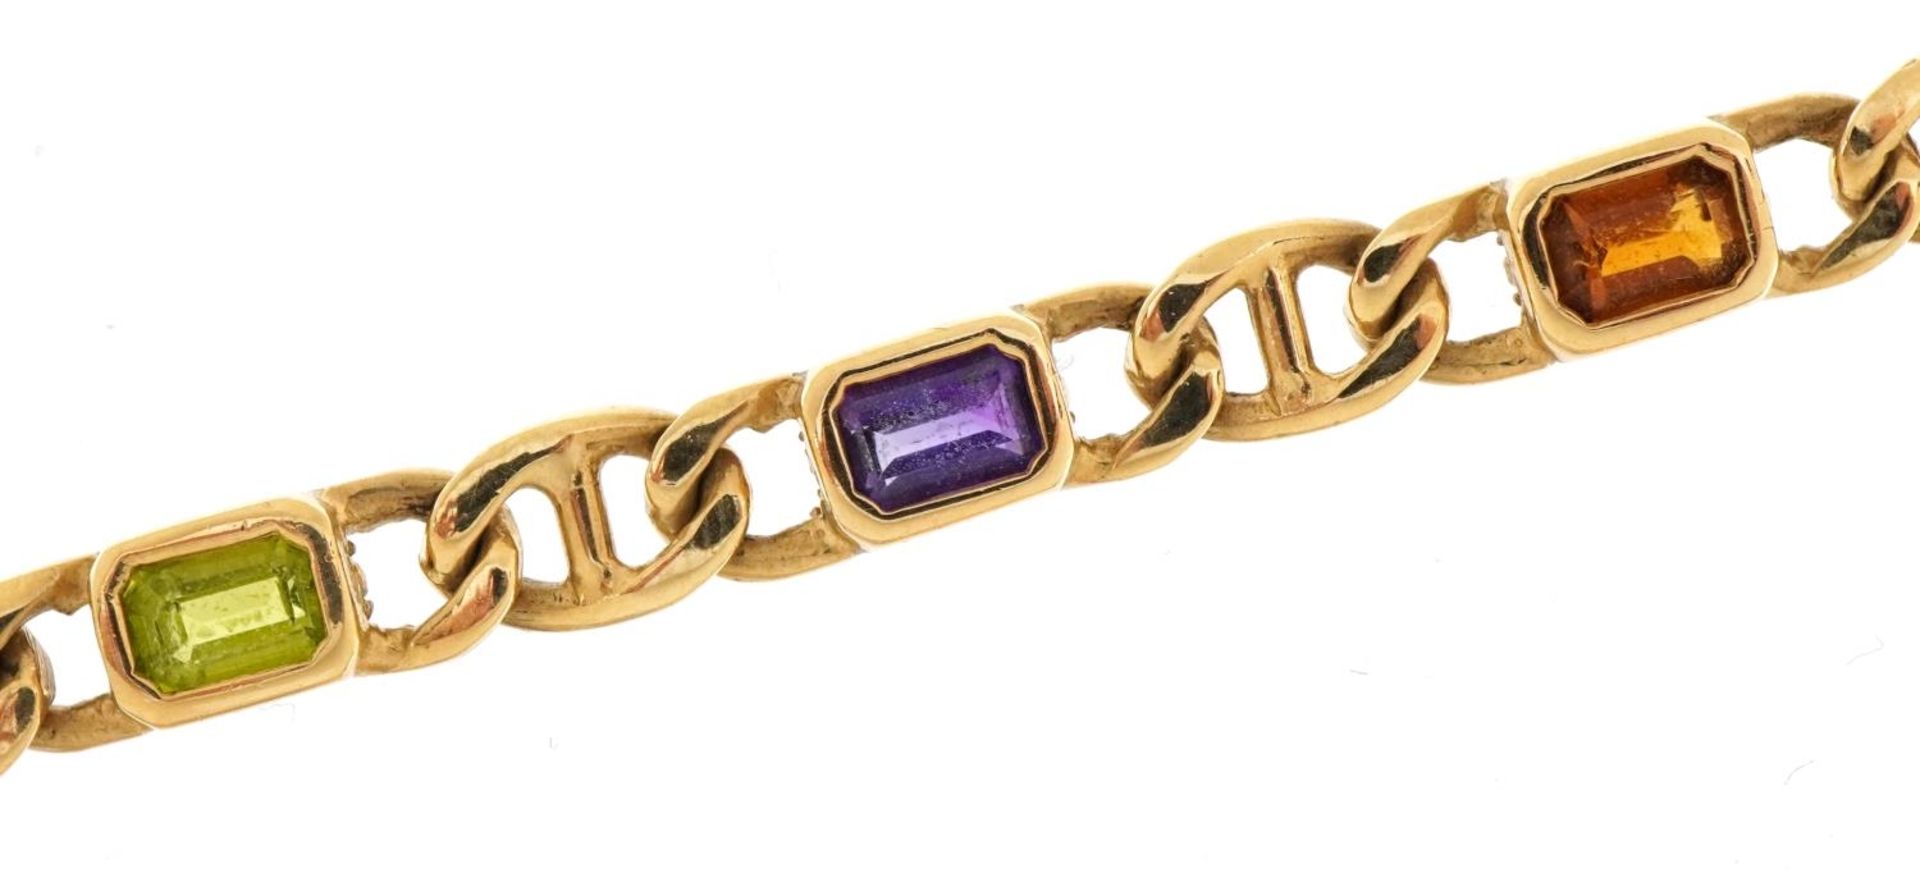 9ct gold curb link design bracelet set with purple, green and orange stones, 17.5cm in length, 12.4g